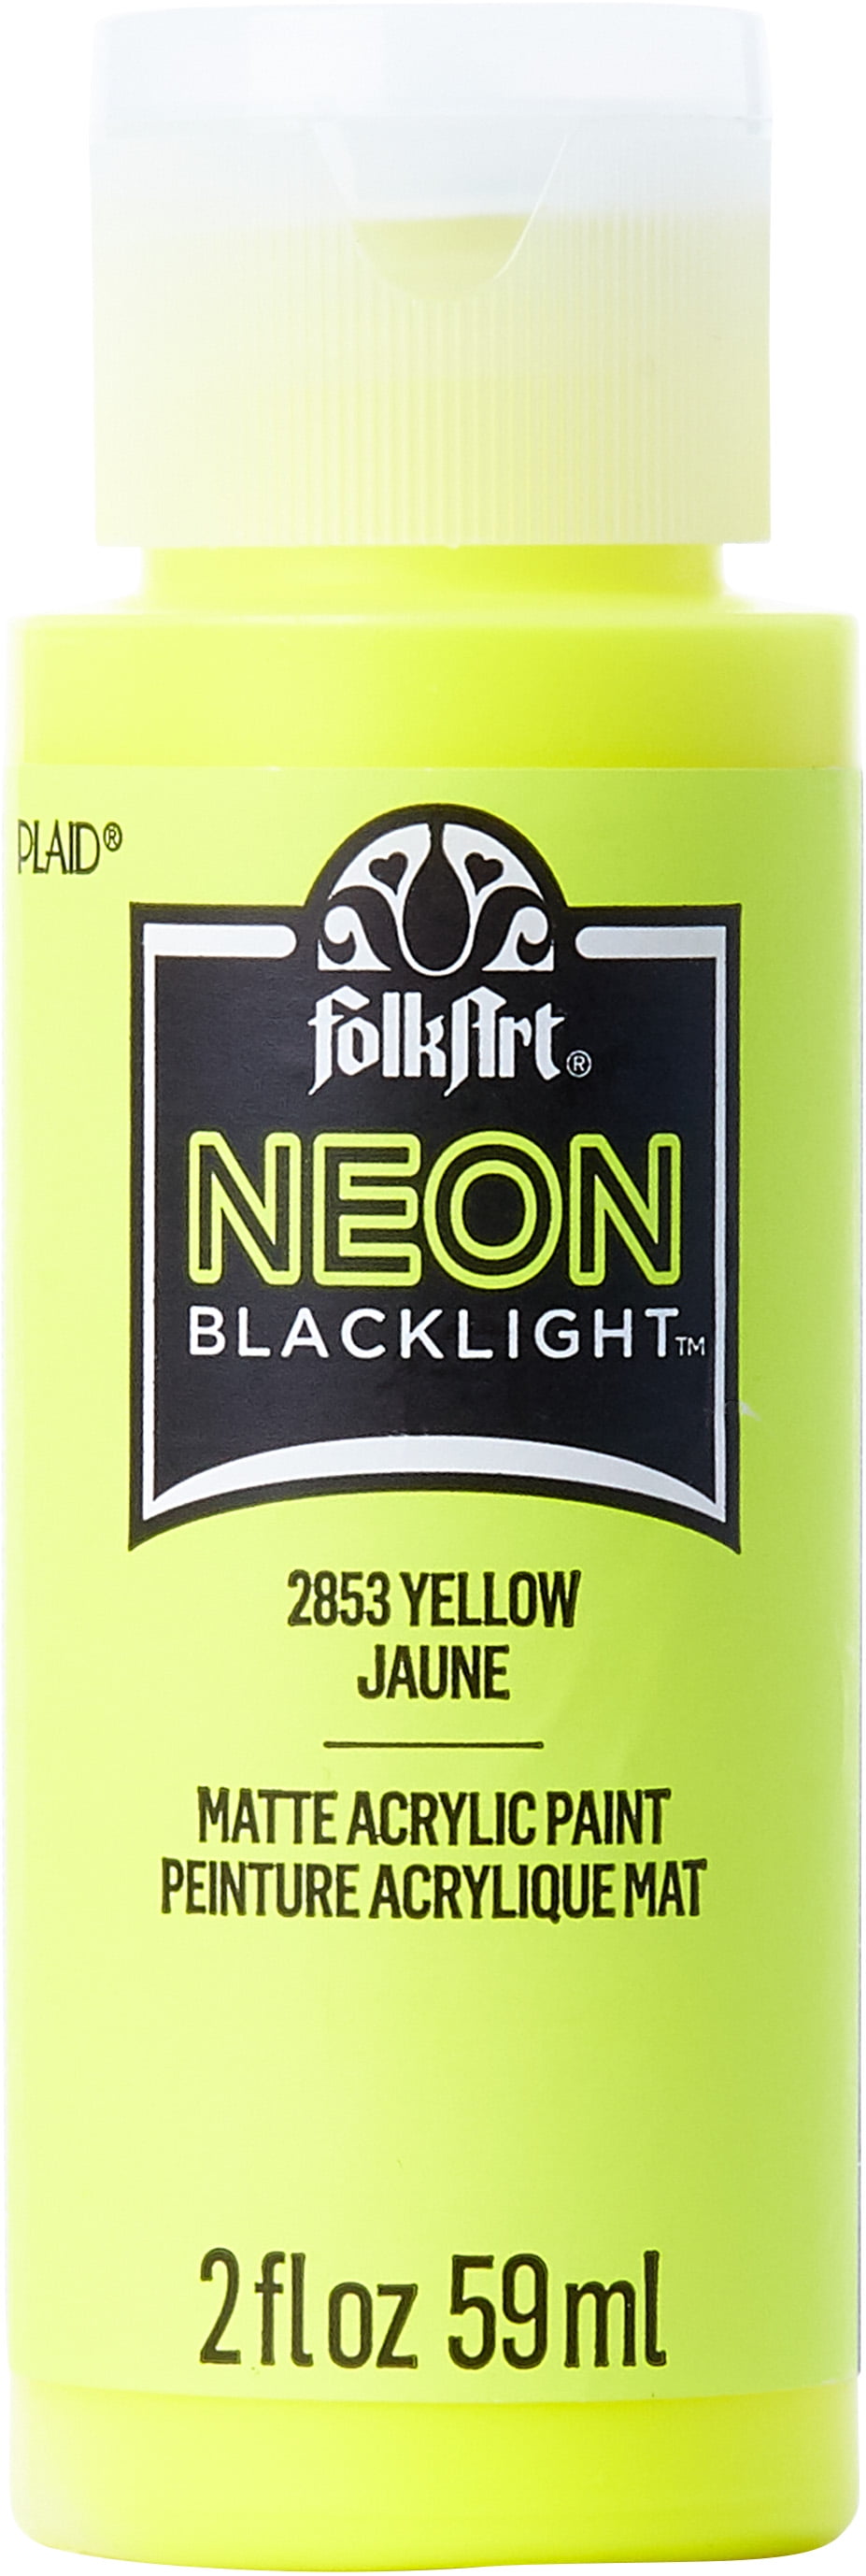 FolkArt Multi-Surface Neon Blacklight Acrylic Paint 4-Color Set